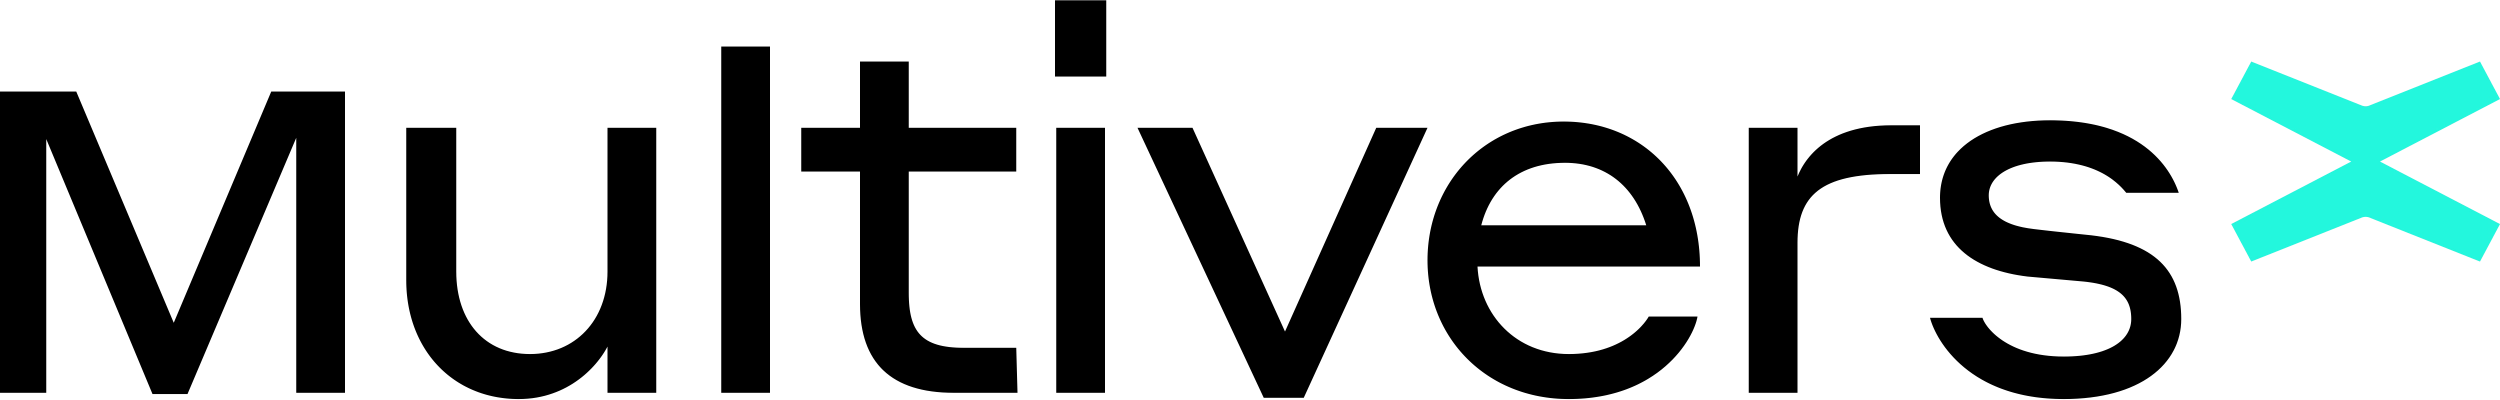 multiversx egld logo